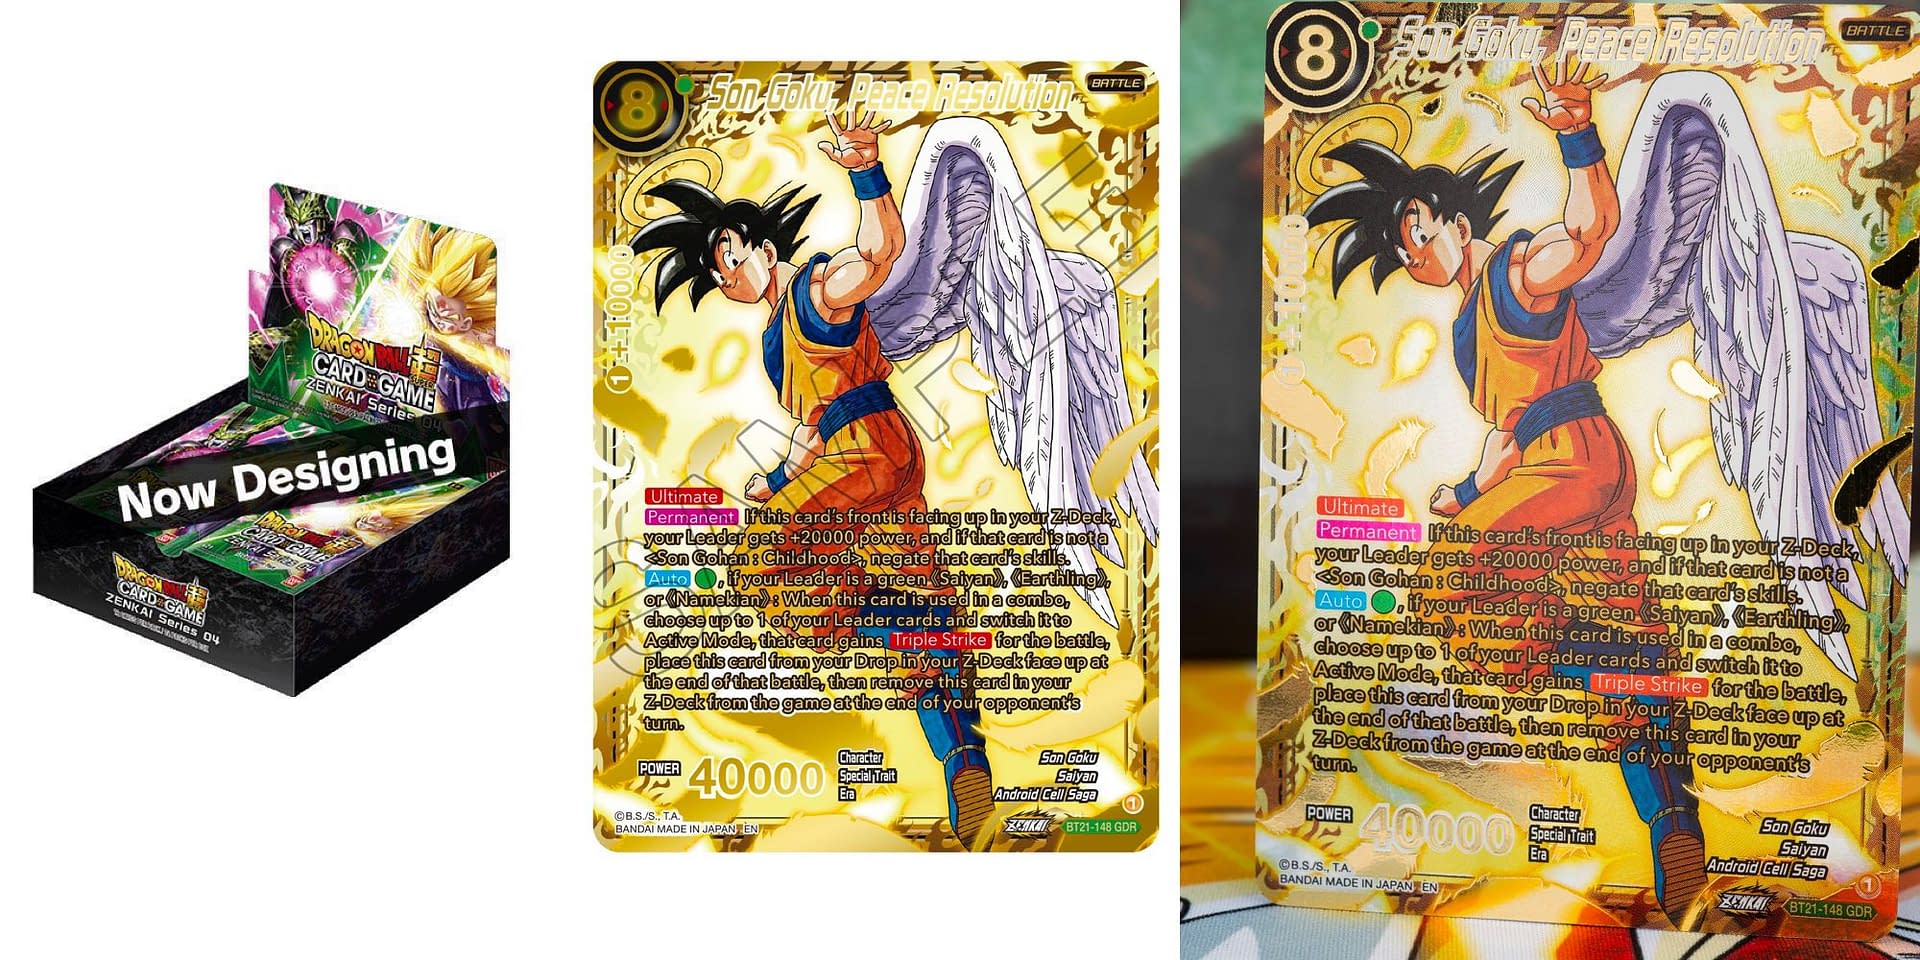 New GOD RARE In Dragon Ball Super Wild Resurgence! – JET Cards